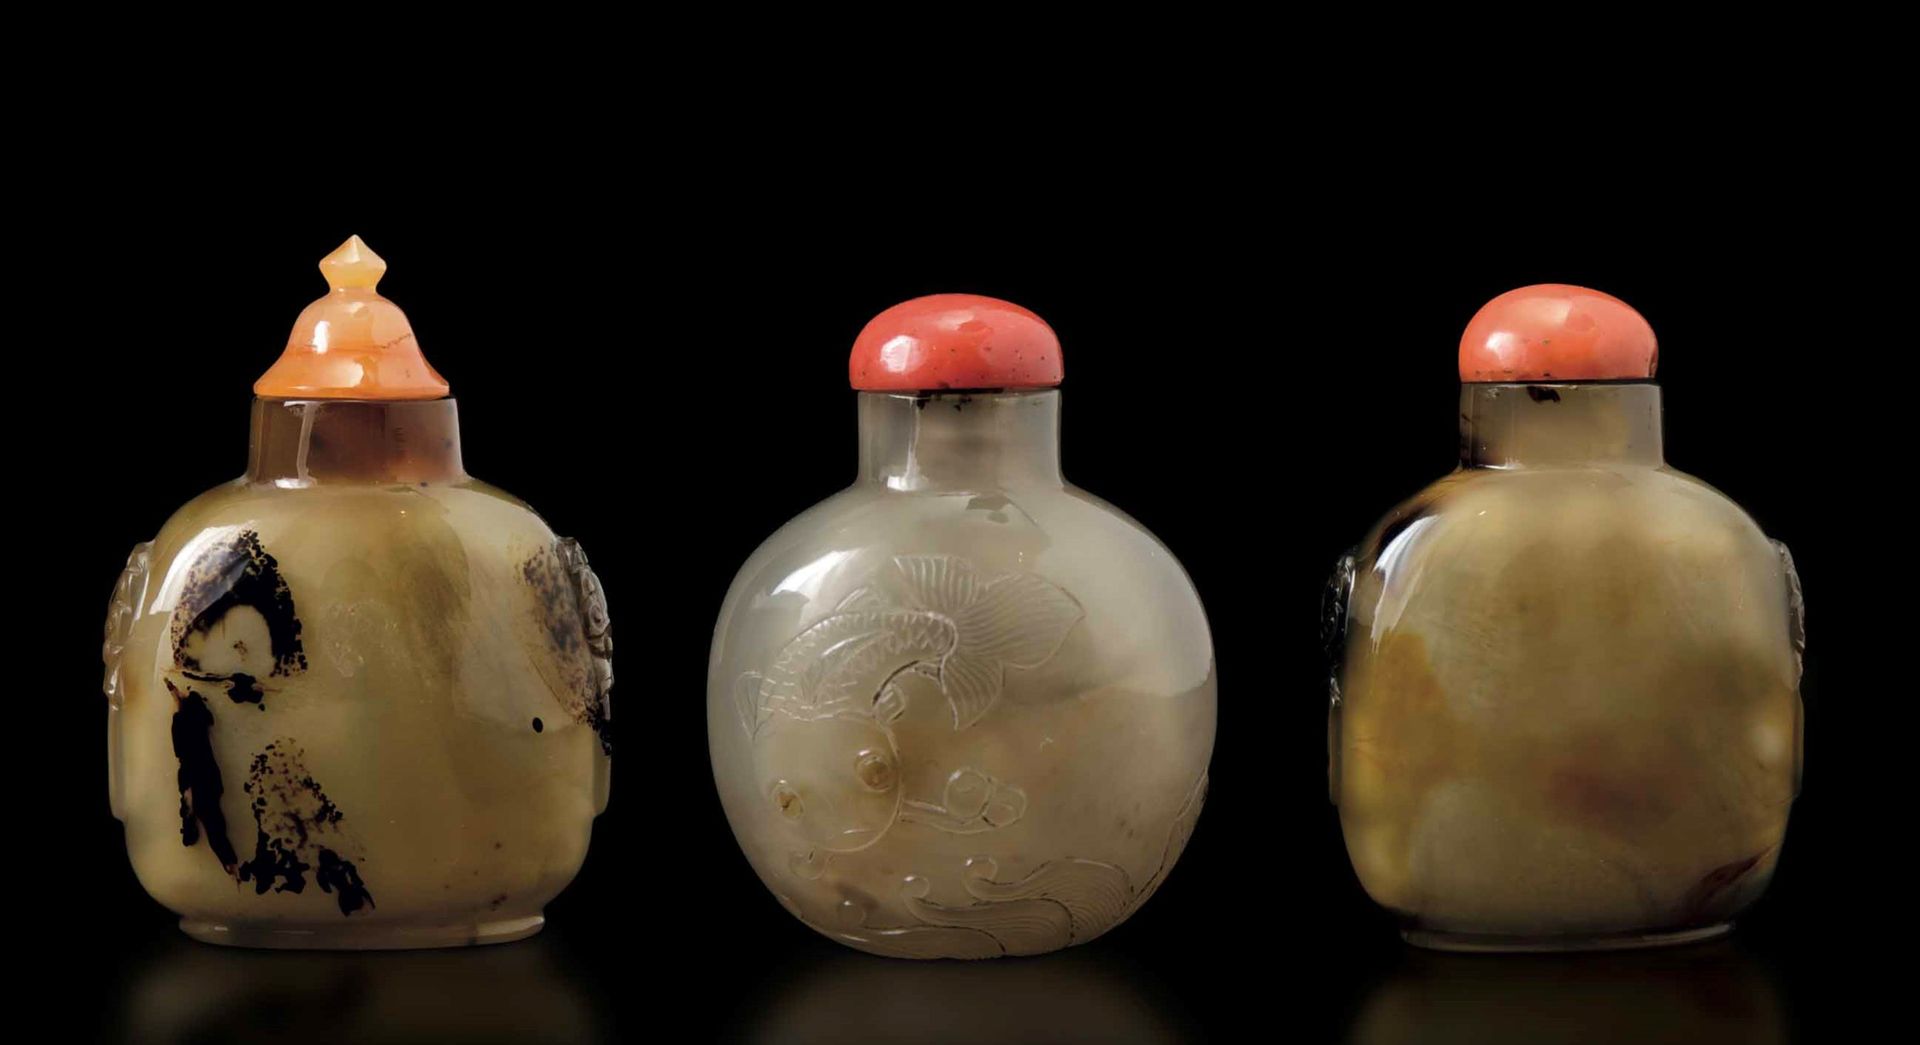 Three agate snuff bottles, China, 1800s 清朝。高度从6厘米到7厘米